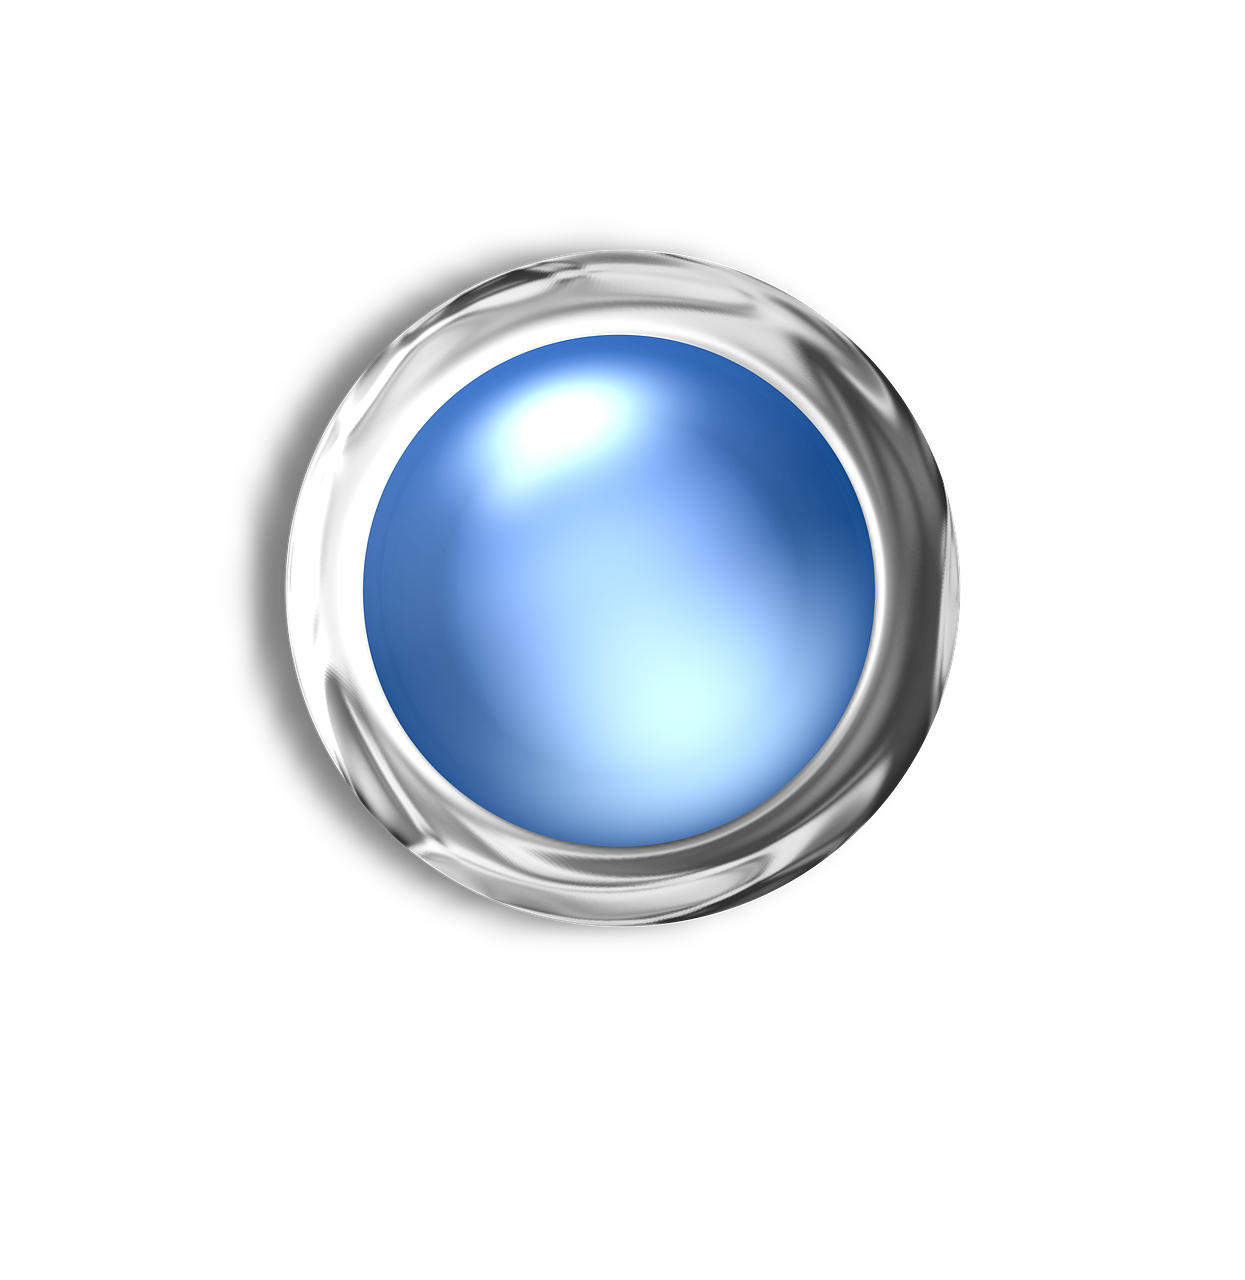 button blue silver free photo